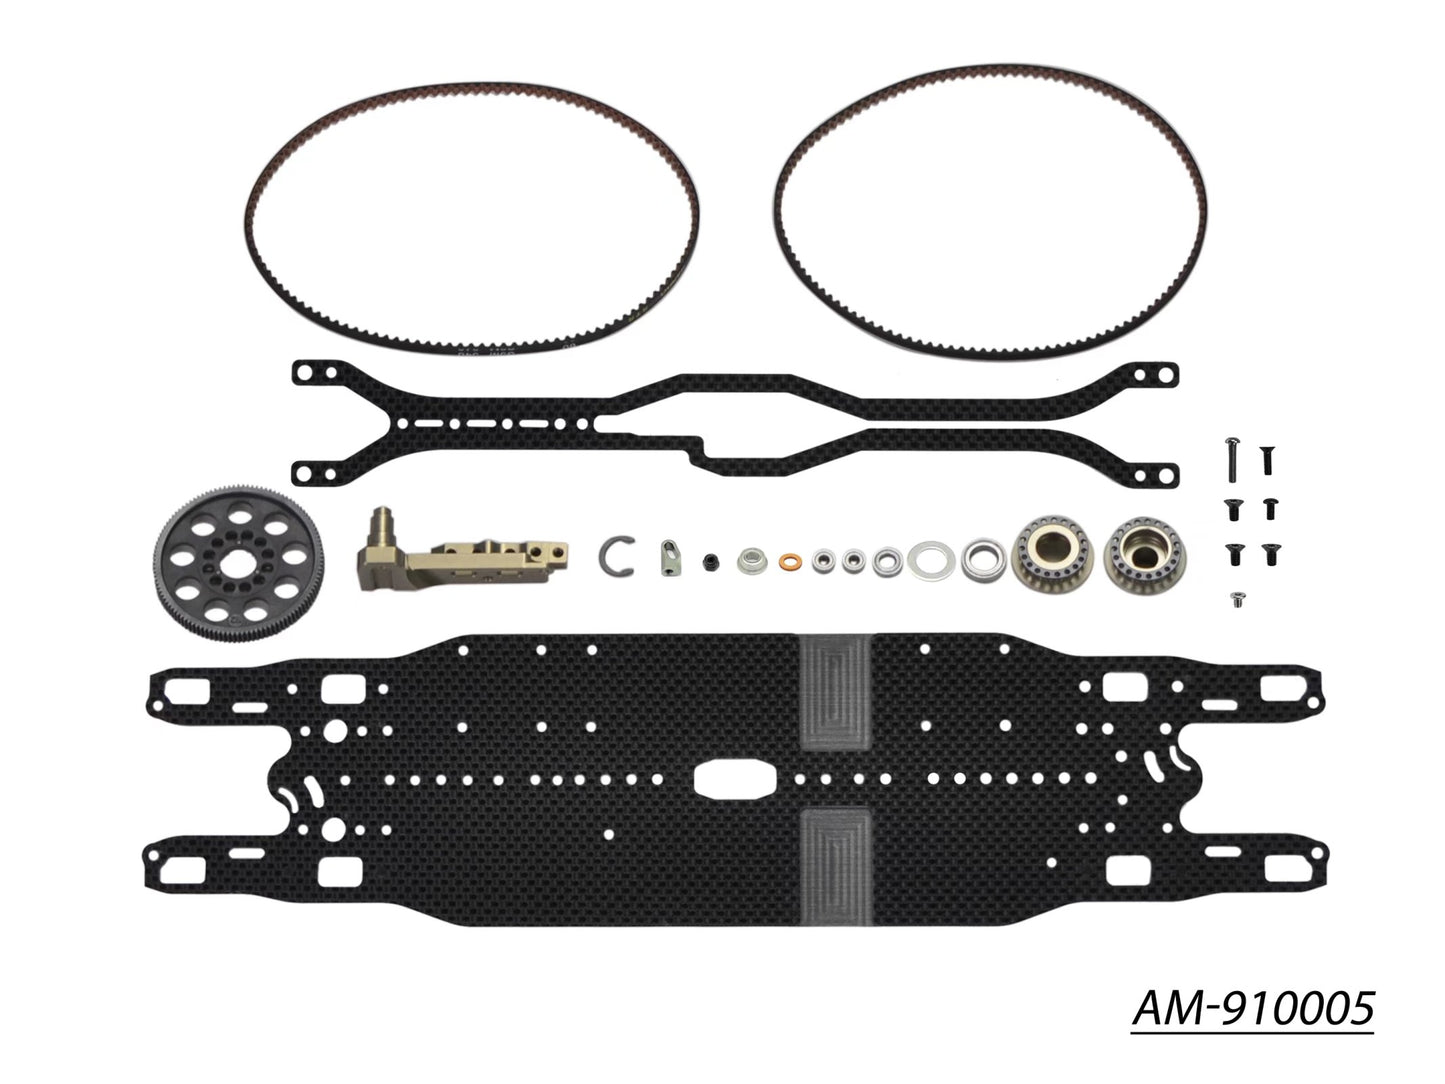 AM Medius Serpent 4X MID Conversion Kit (AM-910005)